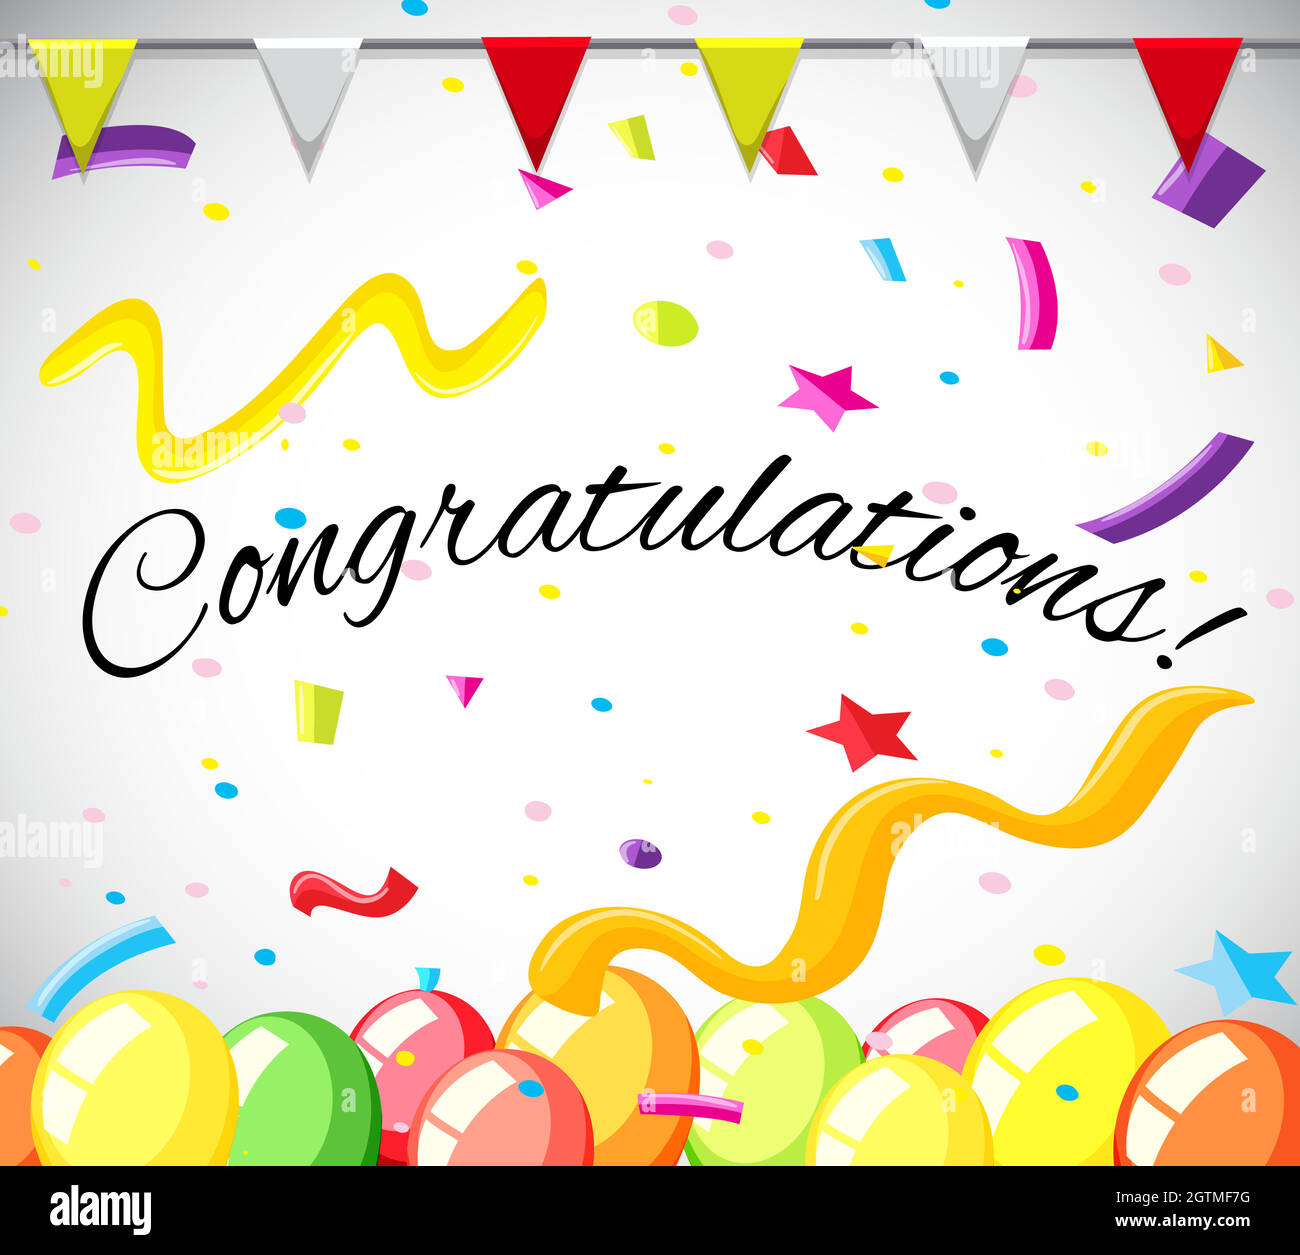 Congratulation card template with colorful balloons Stock Vector